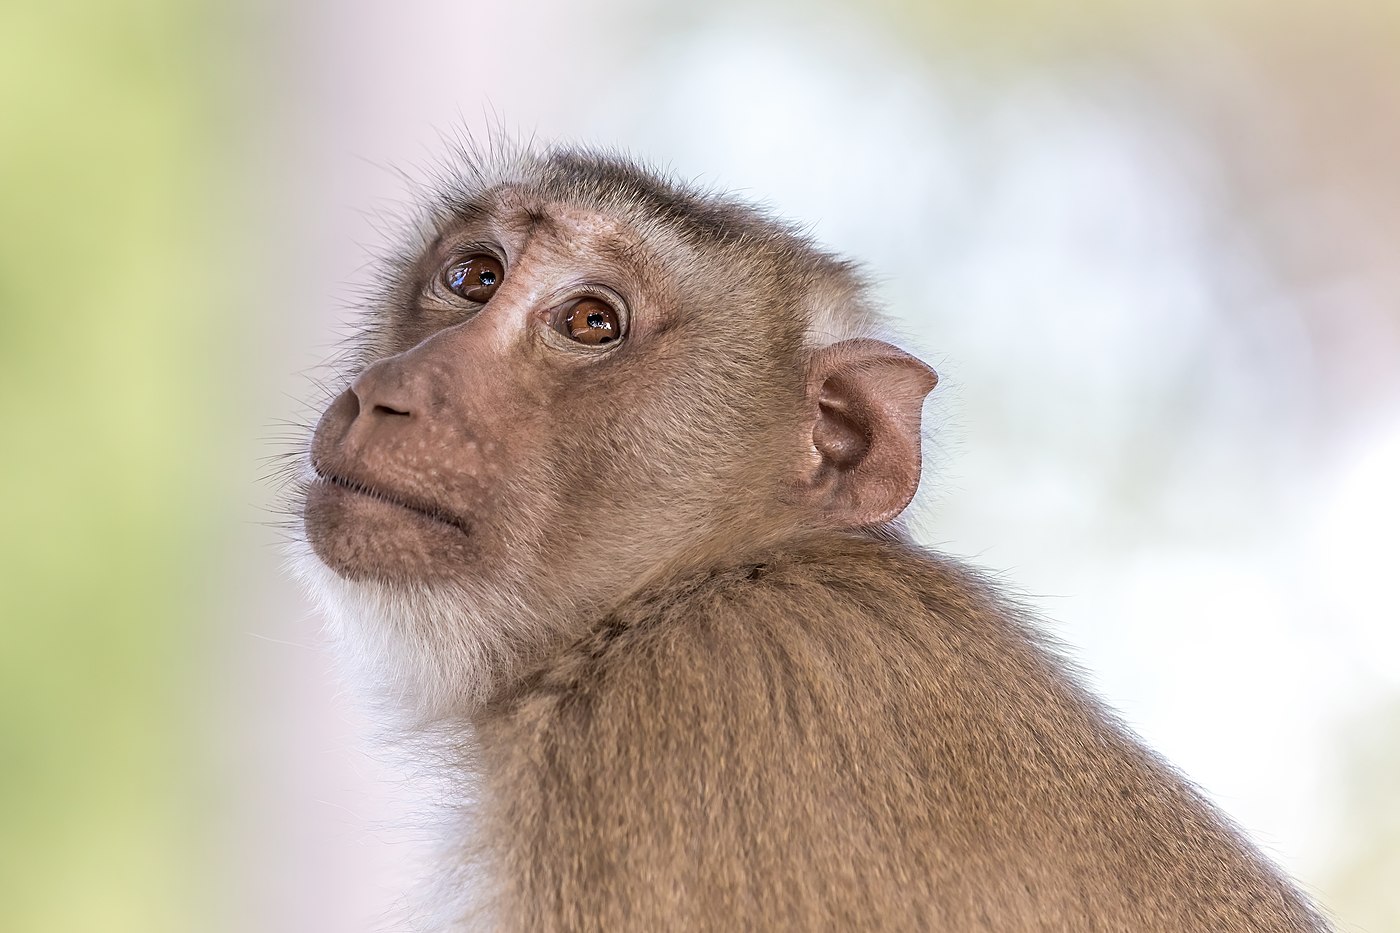 Macaca fasciculari (macaque crabier) les yeux au ciel rêveur anthropomorphique